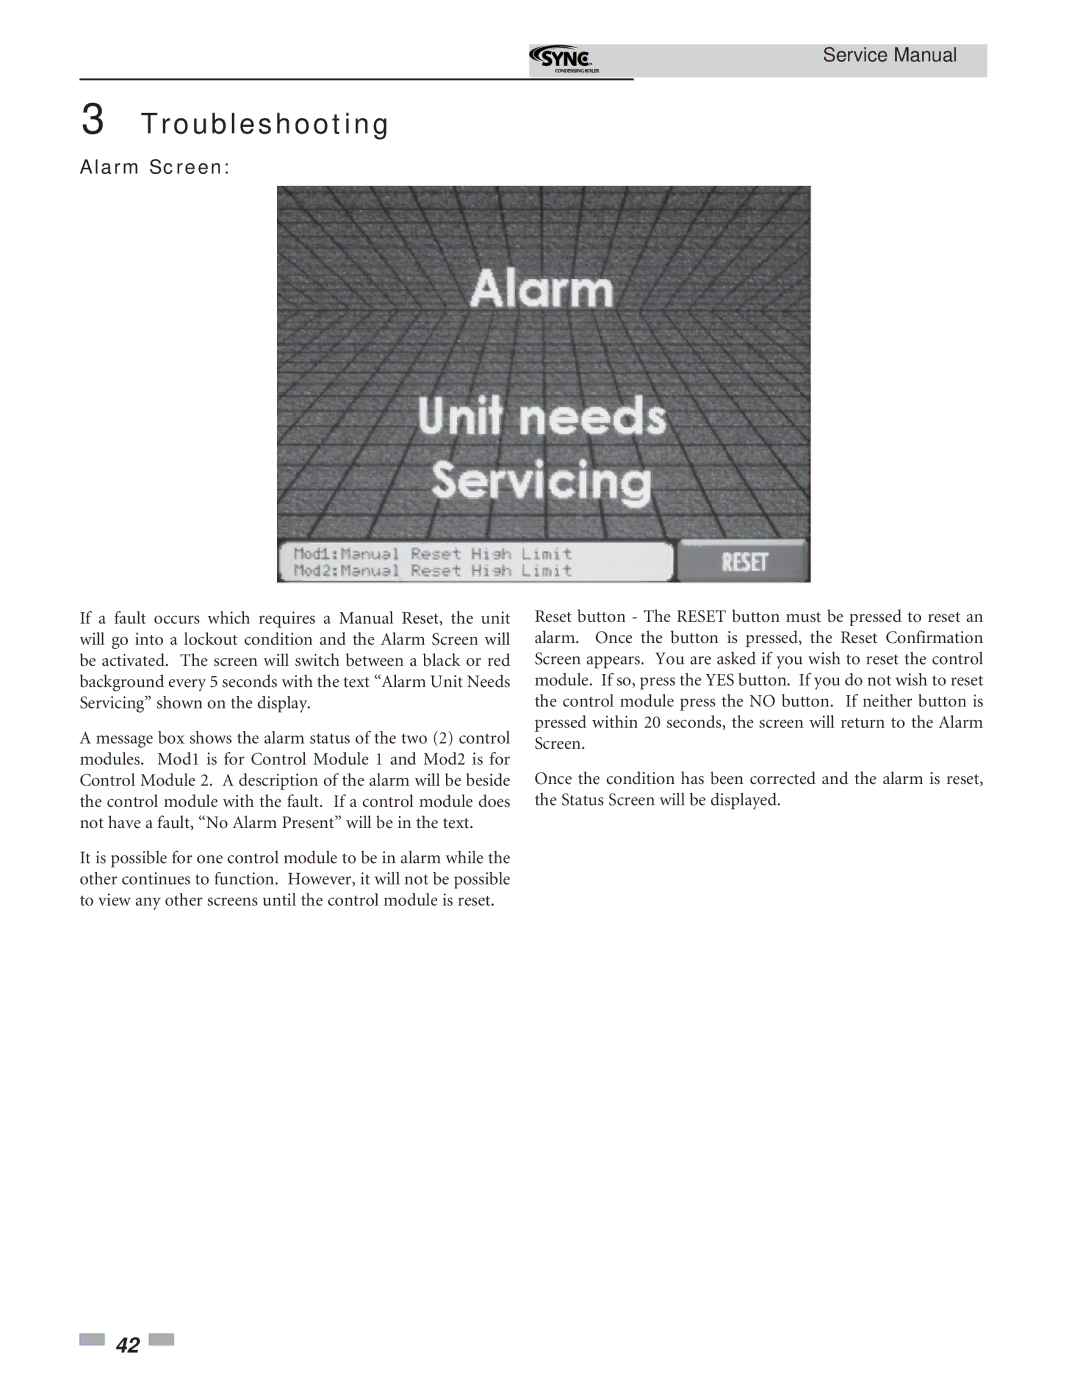 Lochinvar 1 service manual Troubleshooting, Alarm Screen 